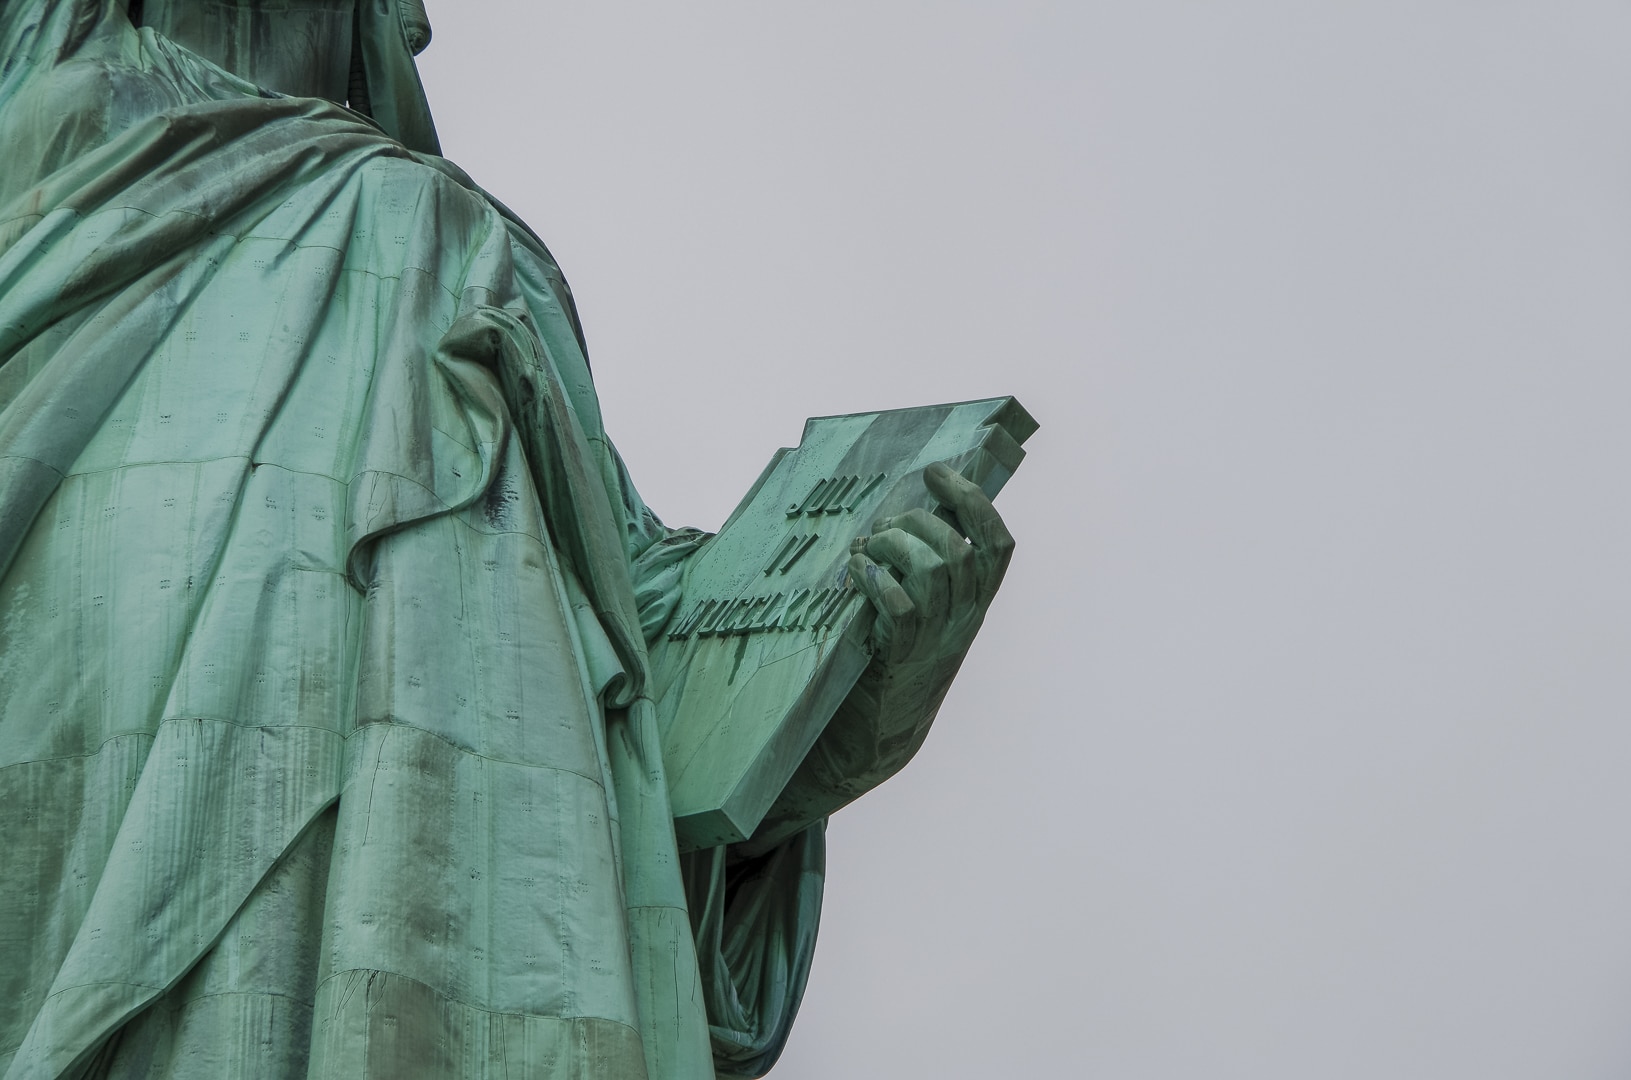 Statue of Liberty NY, USA